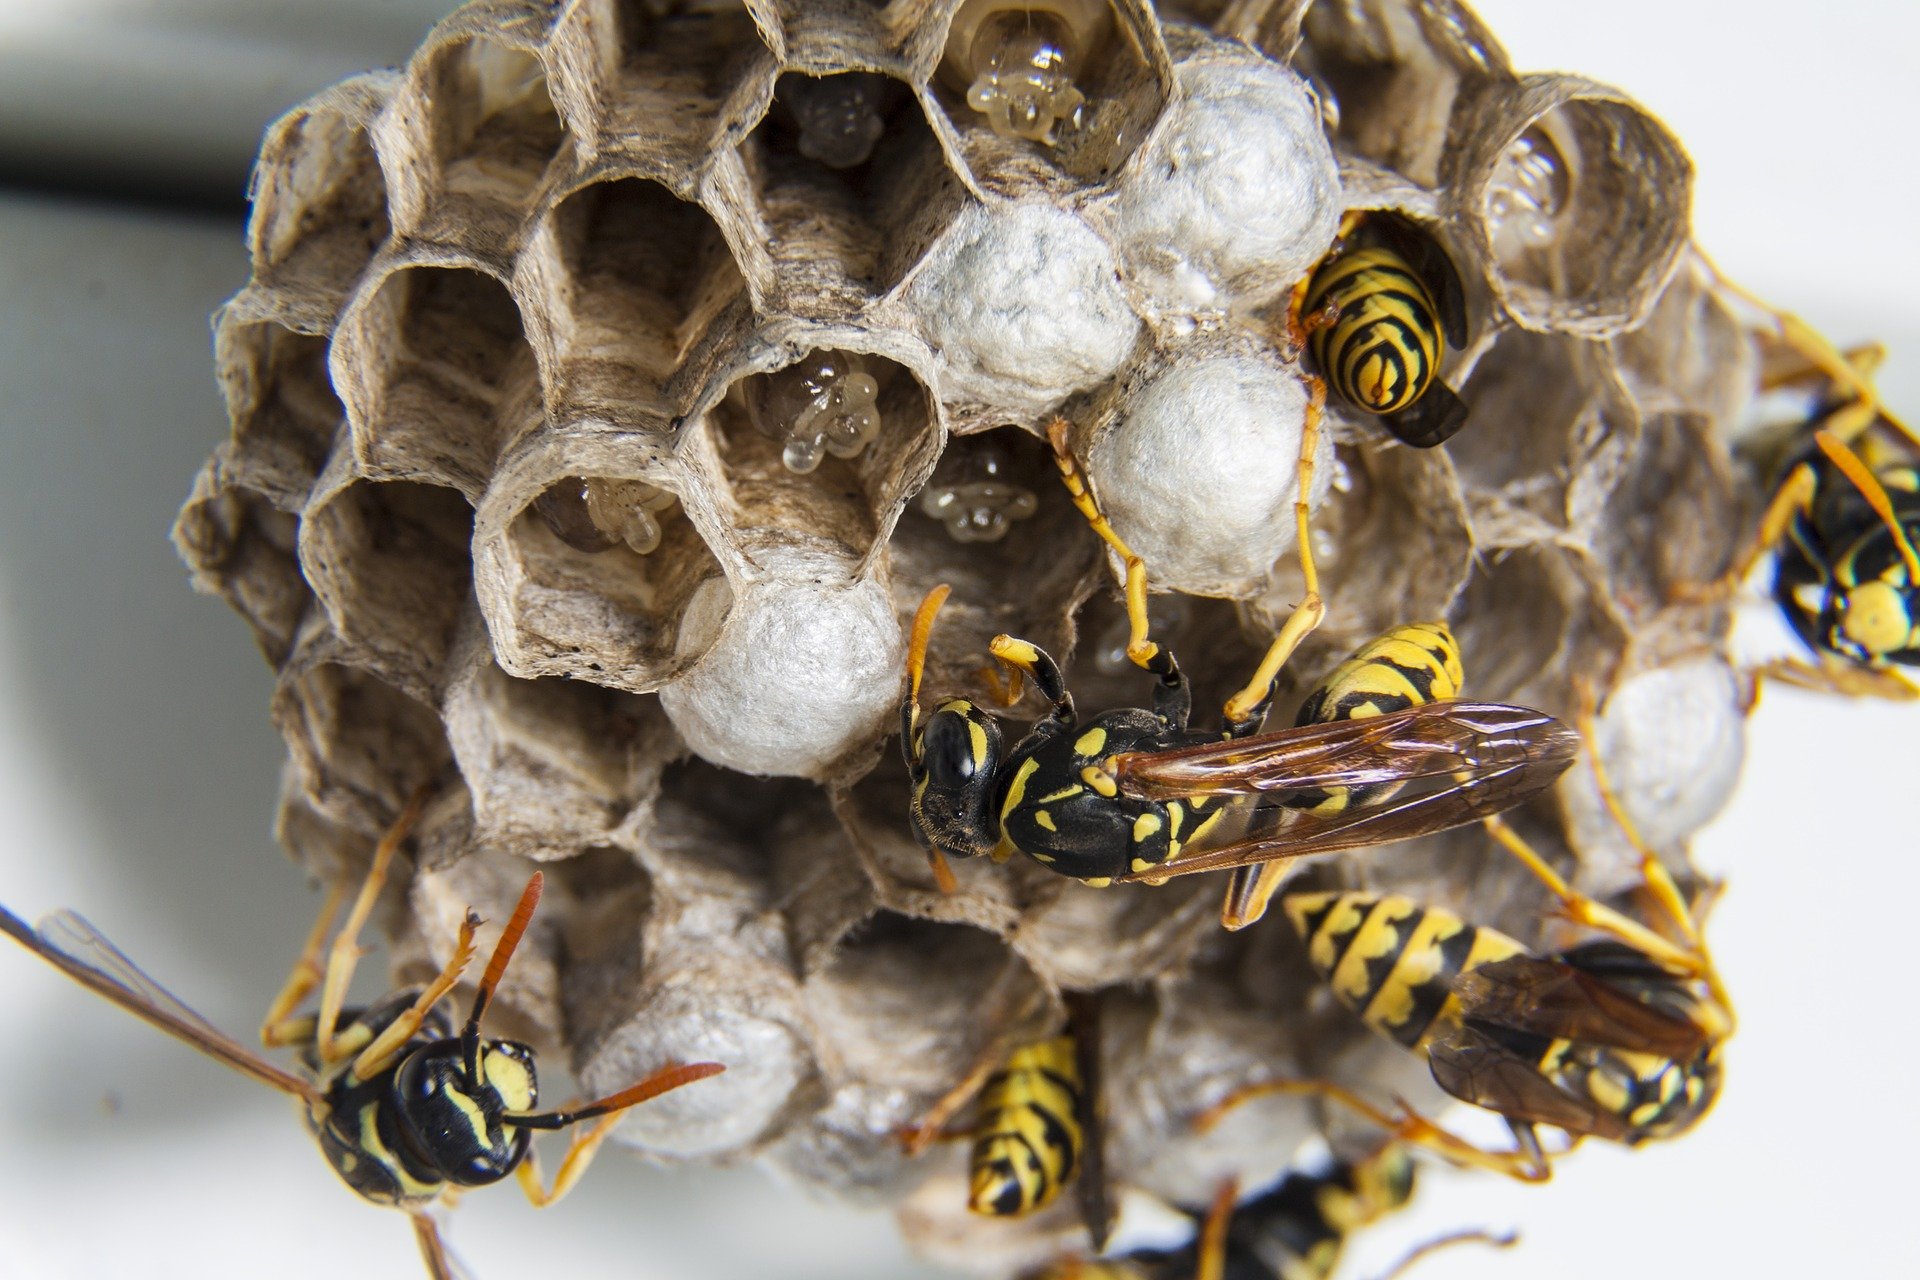 wasps building their nest